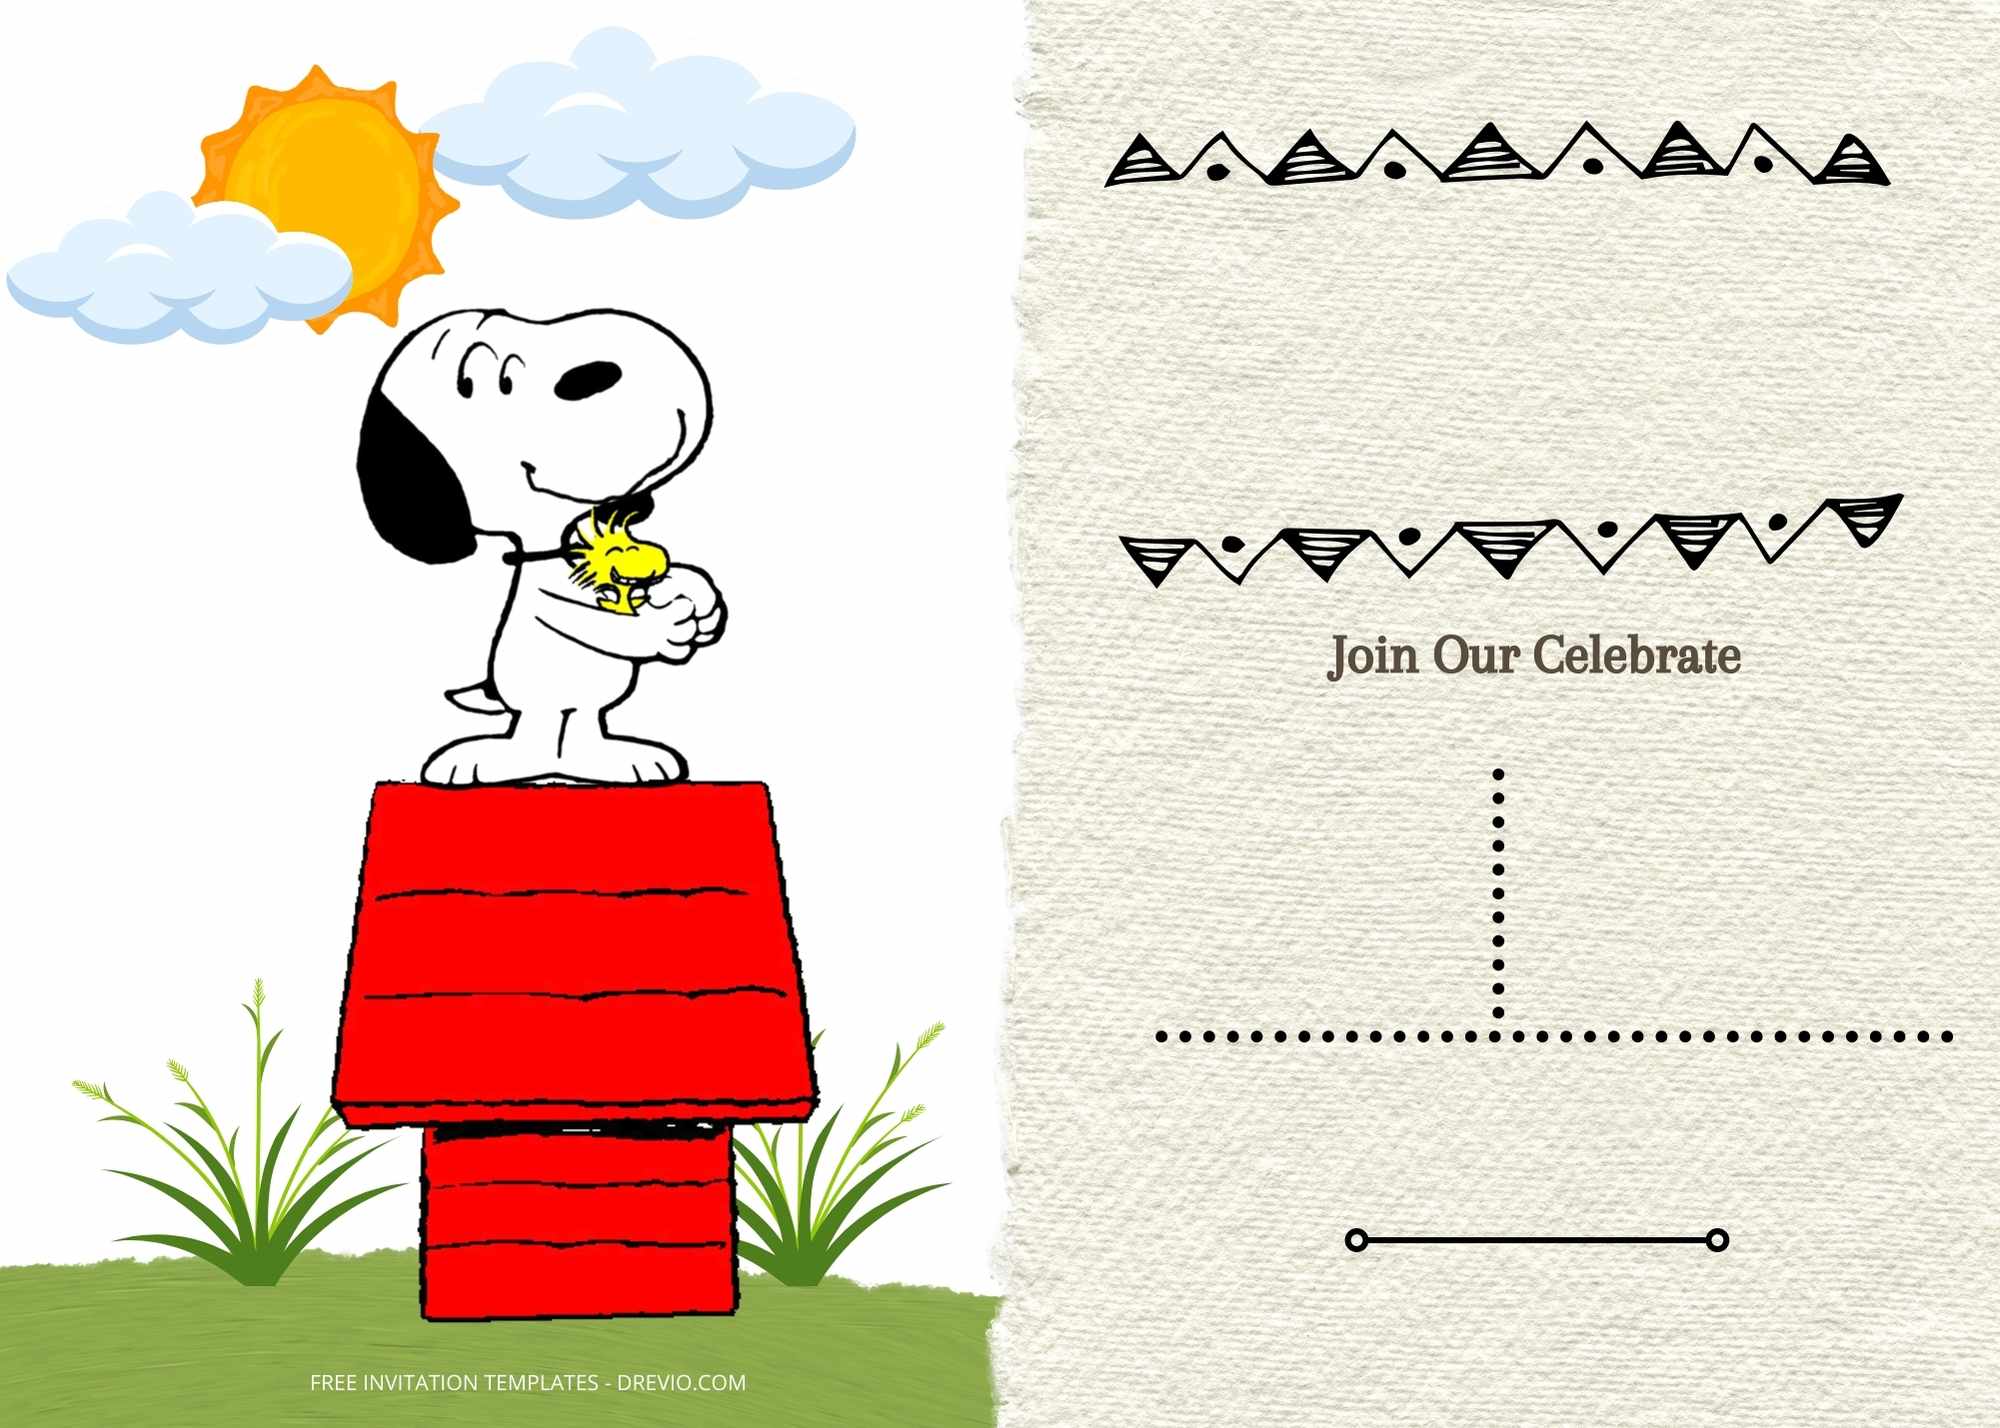 FREE Friendship Power Snoopy Birthday Invitation Templates